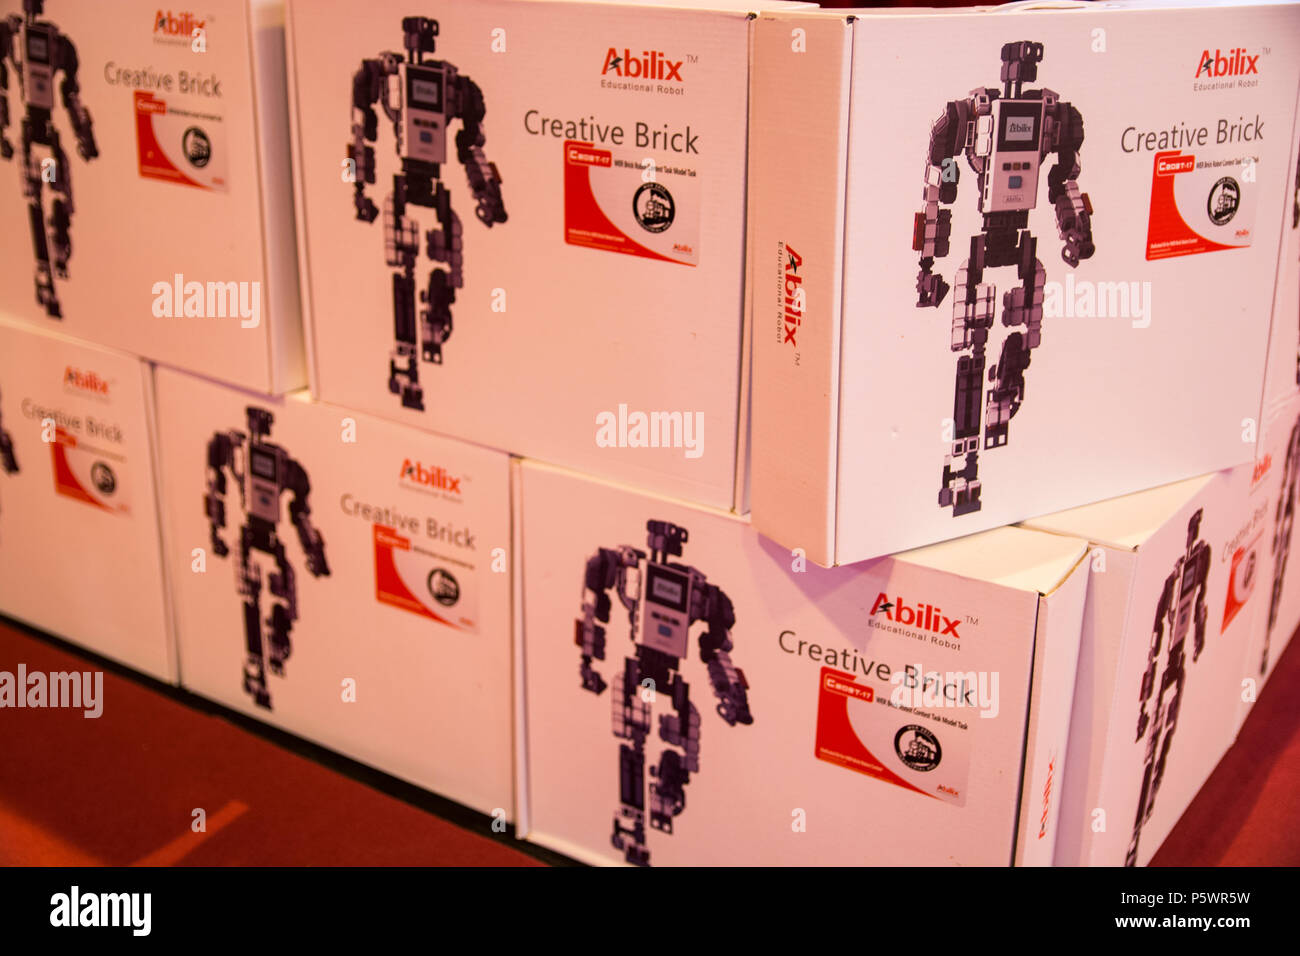 Ladrillo creativa / Creative cuadra de Abilix, apiladas y encajonado en GR-EX (Global Robot Expo). Foto de stock